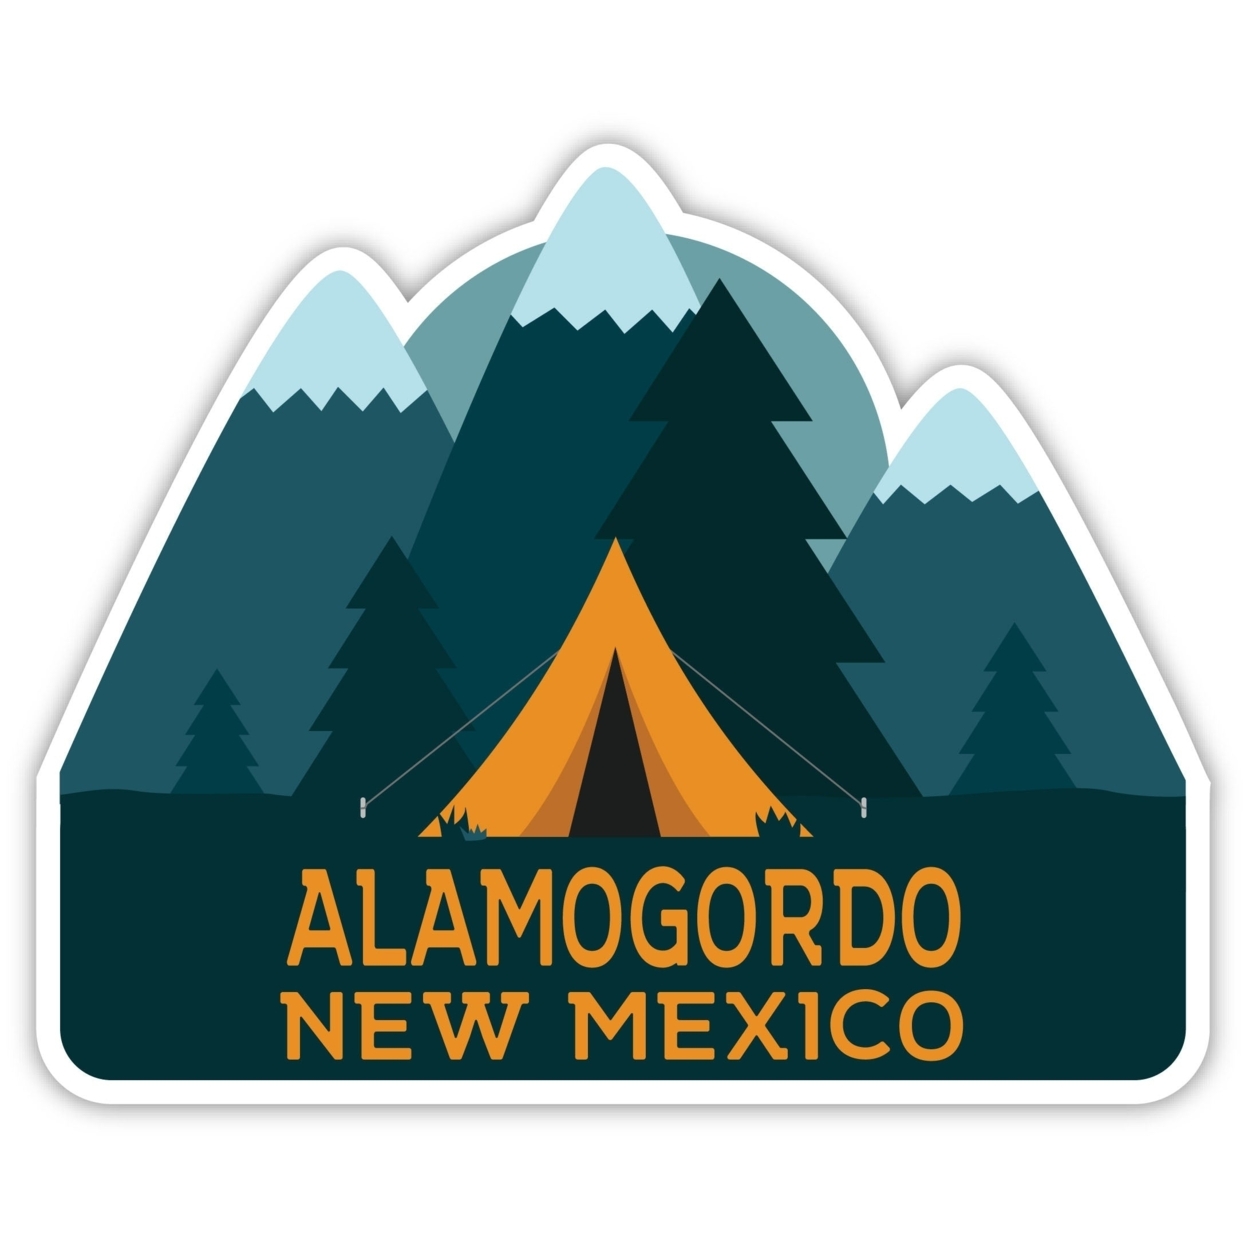 Alamogordo New Mexico Souvenir Decorative Stickers (Choose Theme And Size) - Single Unit, 4-Inch, Tent